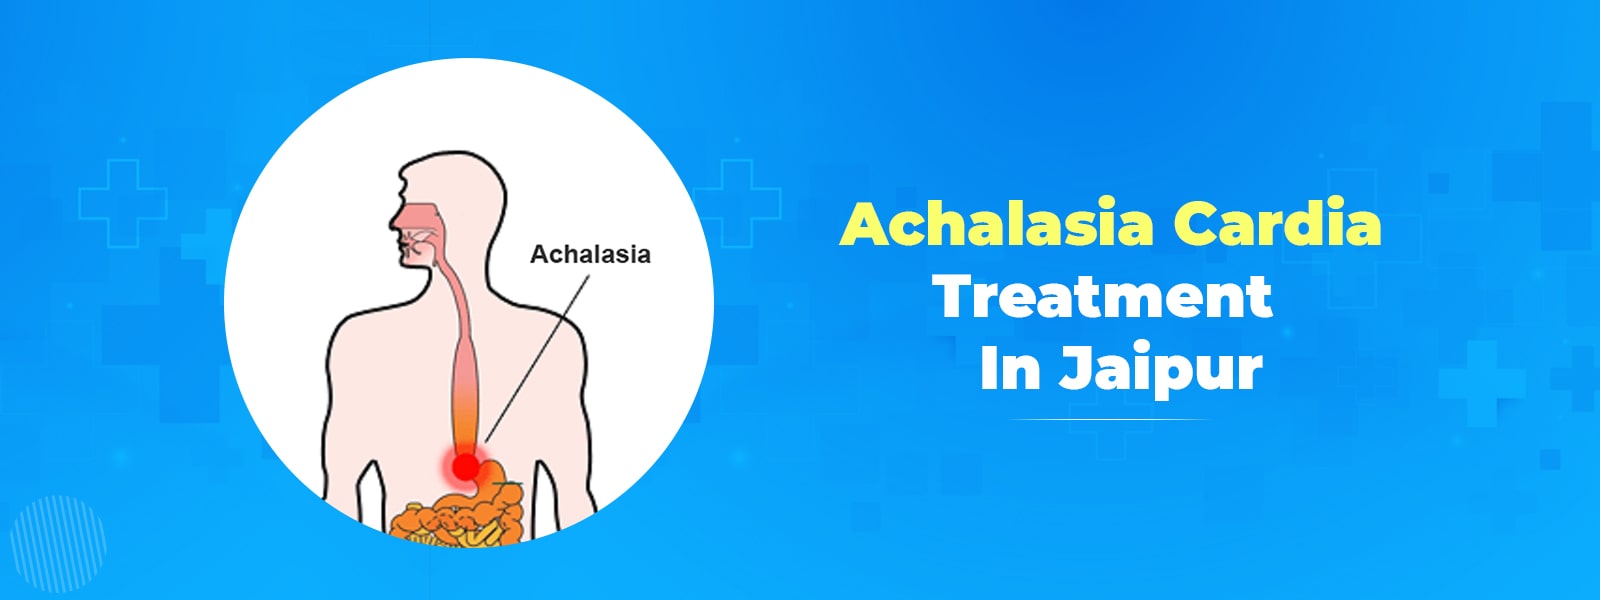 Achalasia Cardia Treatment in Jaipur